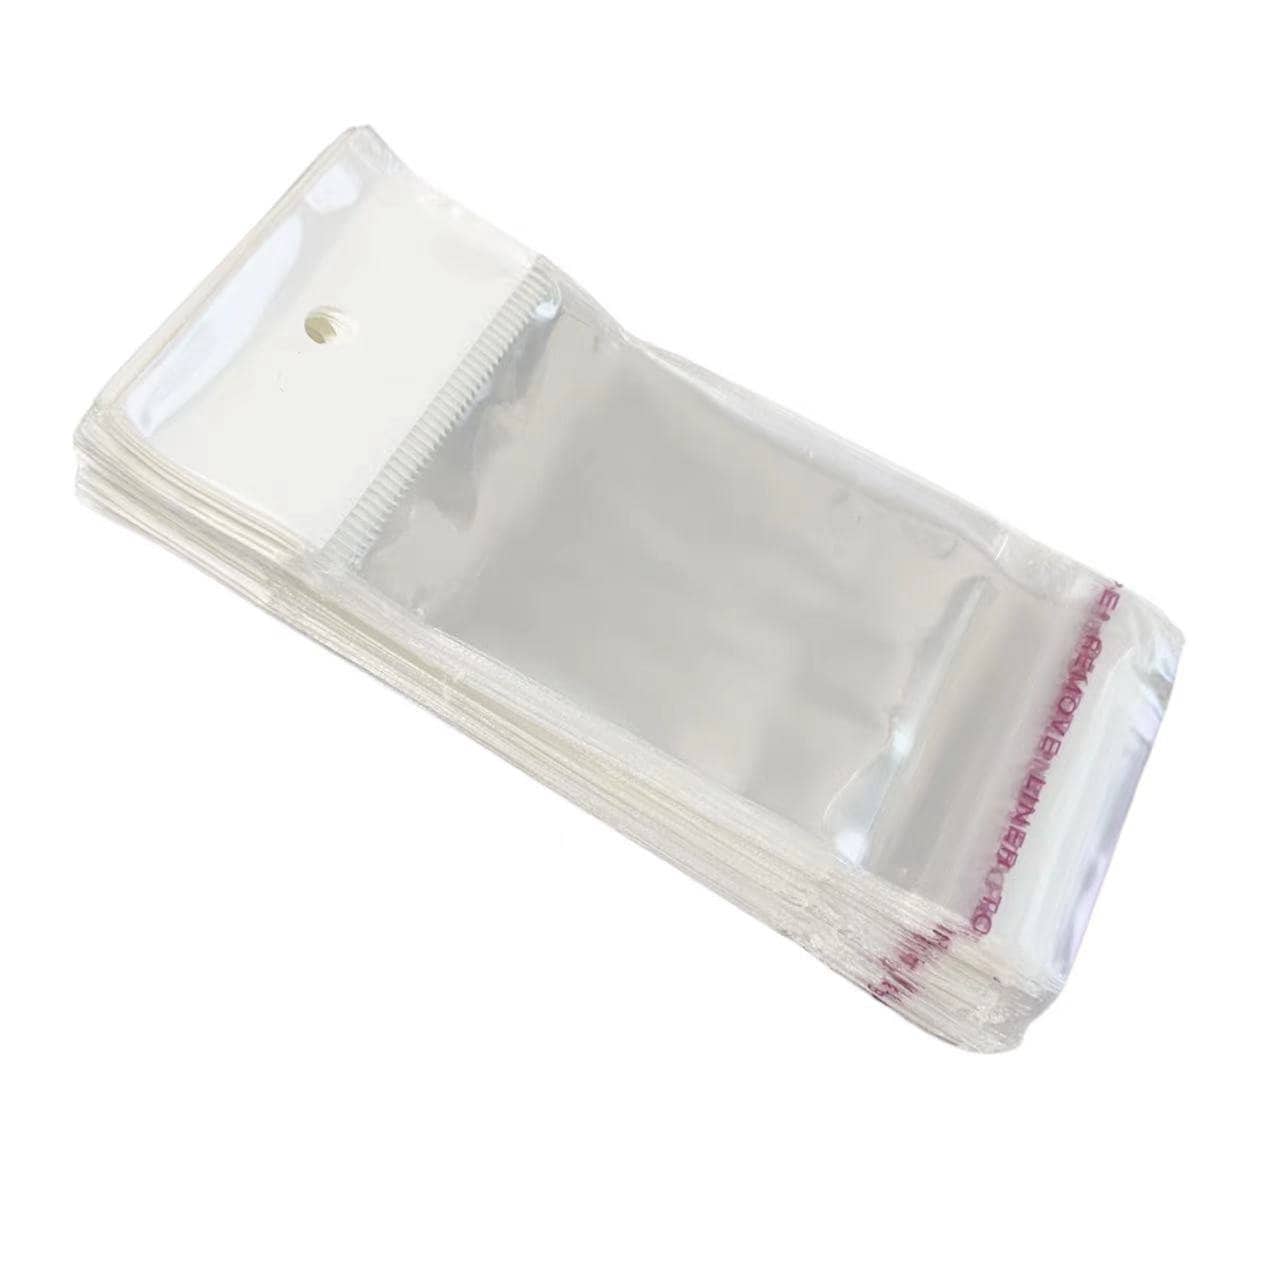 200x Small Clear Bags Plastic Baggies Baggy Grip Self Seal